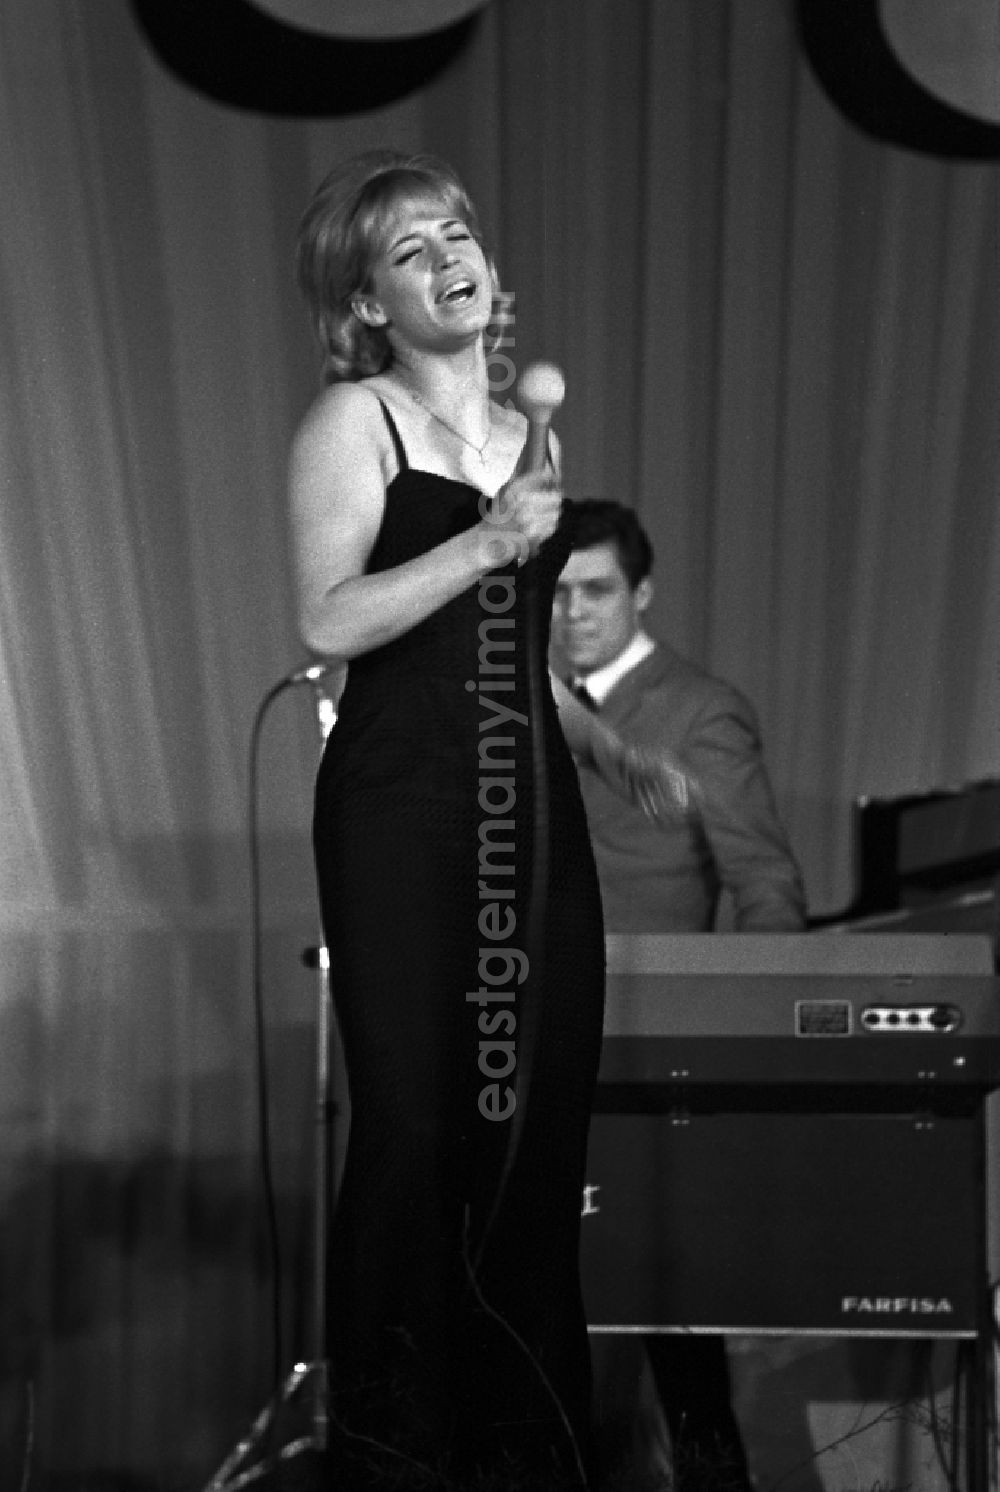 GDR image archive: Magdeburg - The swedish pop singer Lill-Babs (Barbro Margareta Svensson) at a show in Magdeburg in Saxony - Anhalt